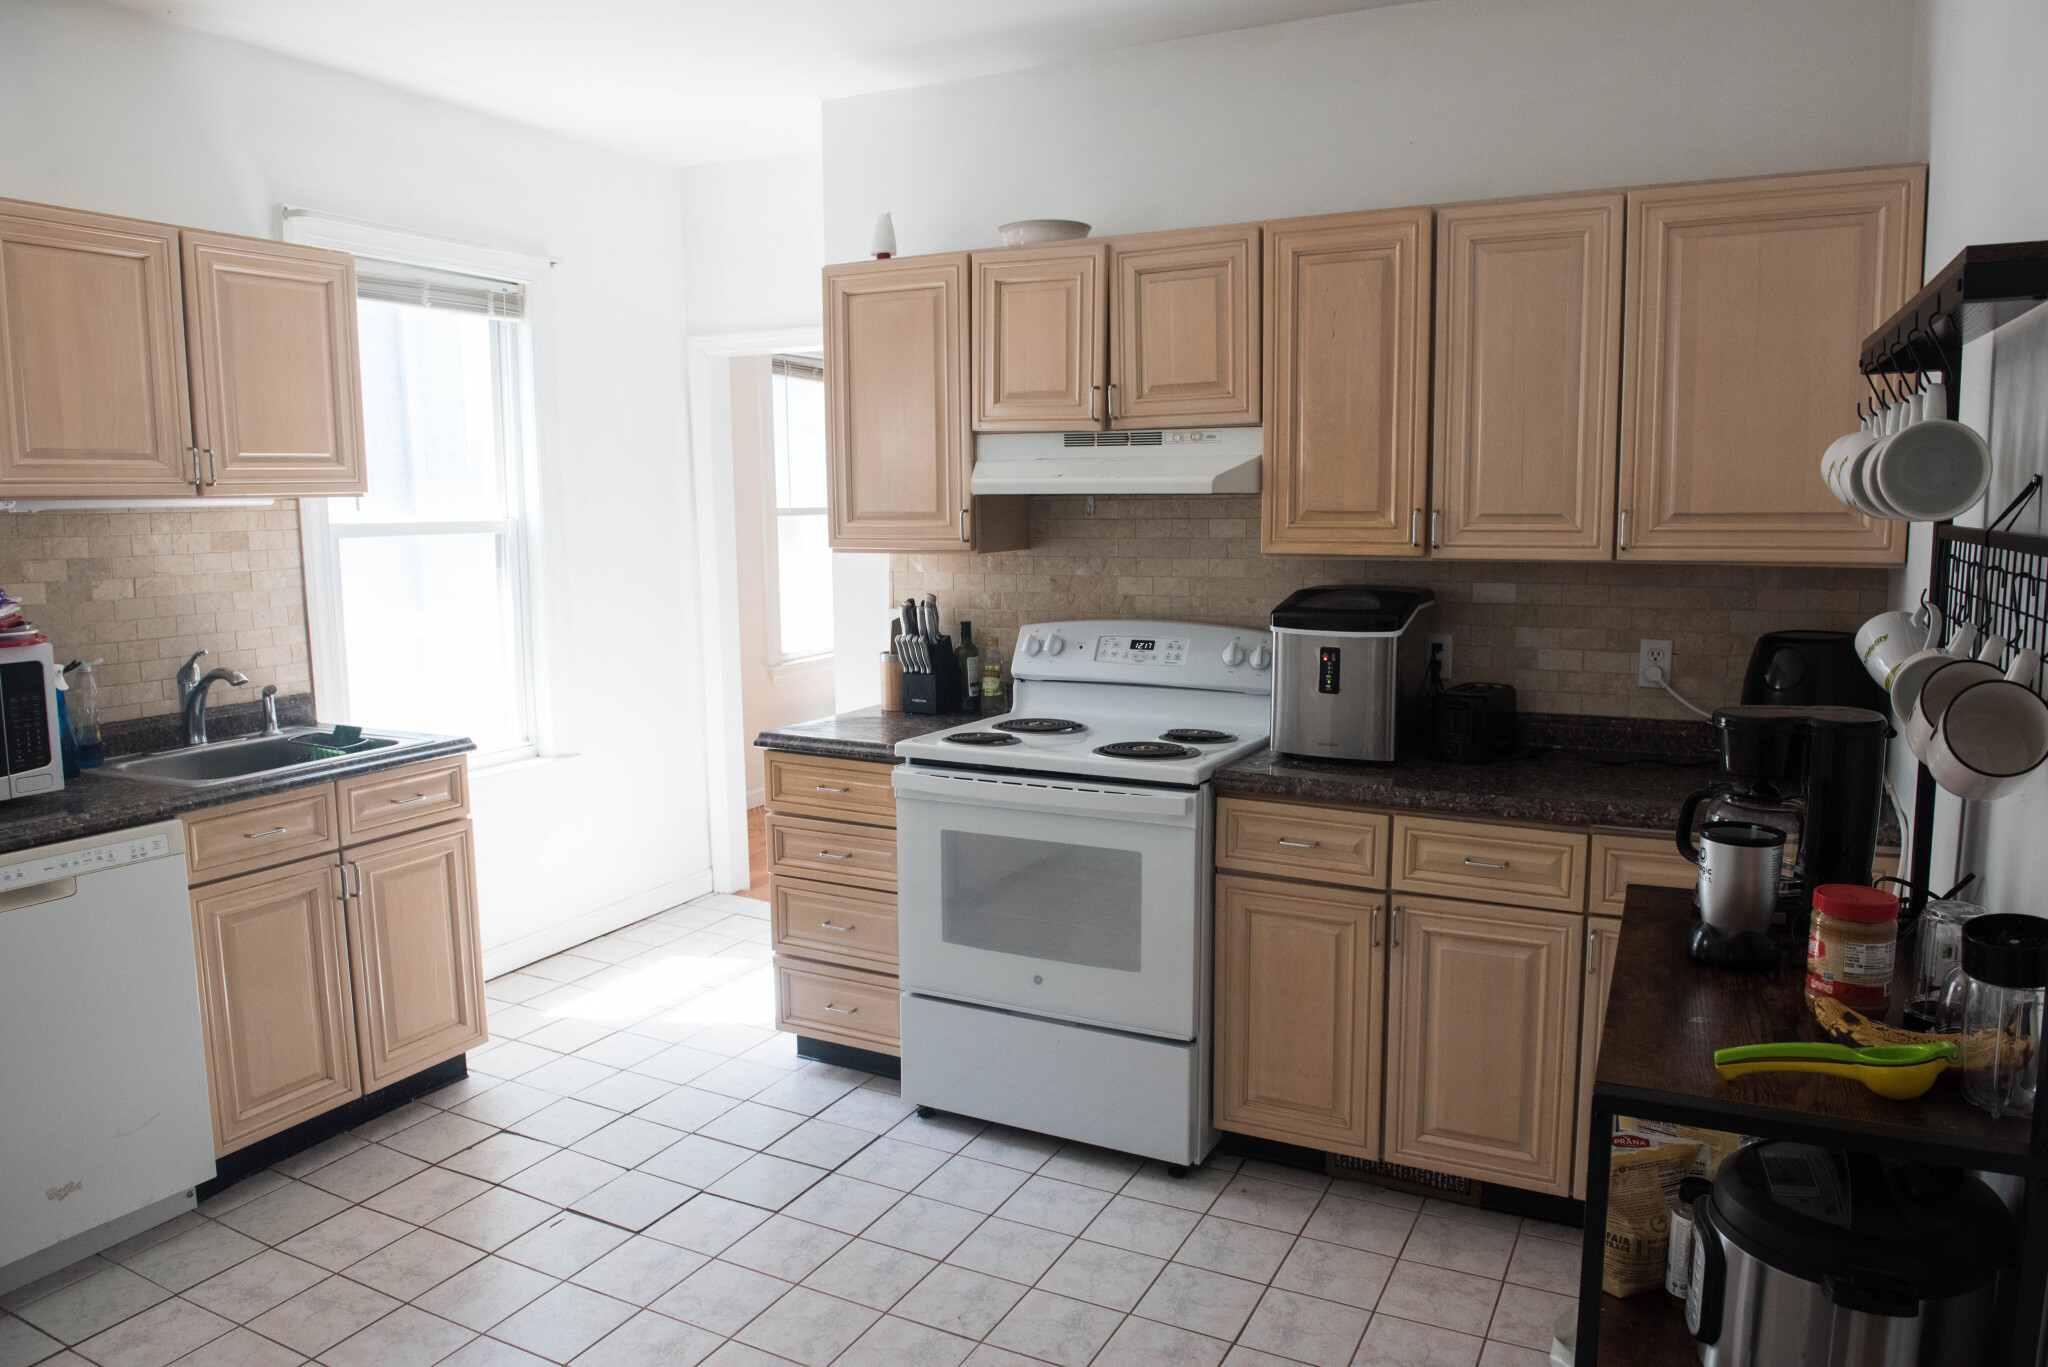 Photos of apartment on Brock St.,Boston MA 02135